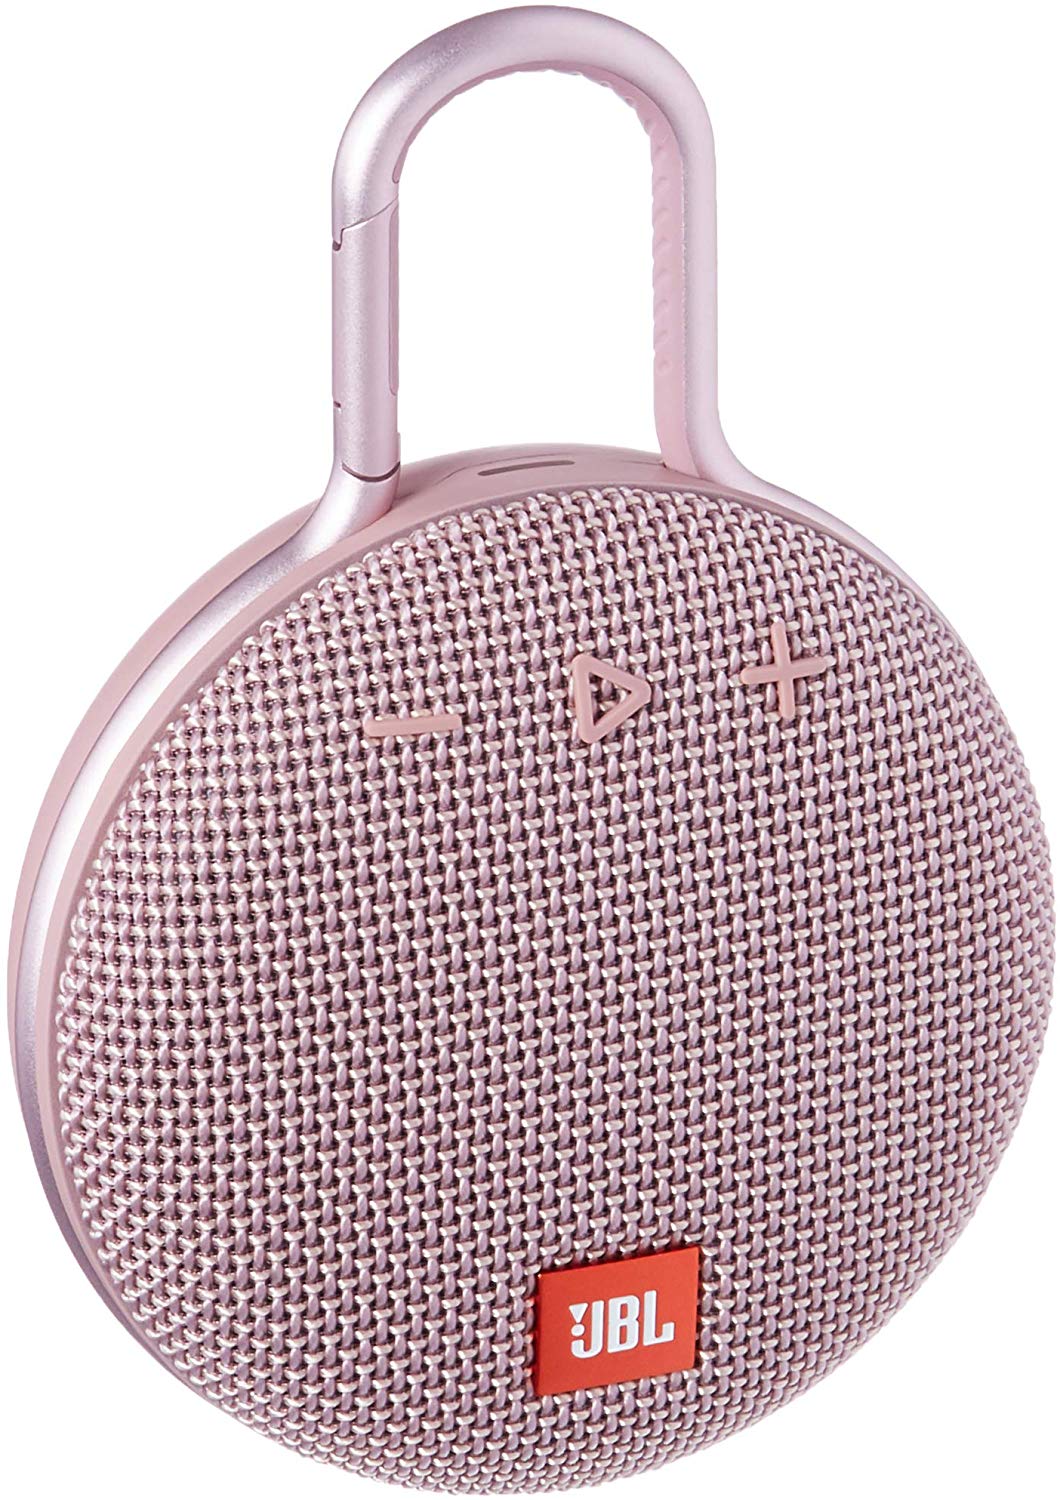 JBL Clip 3 Portable Waterproof Wireless Bluetooth Speaker, Pink - Certified Refurbished